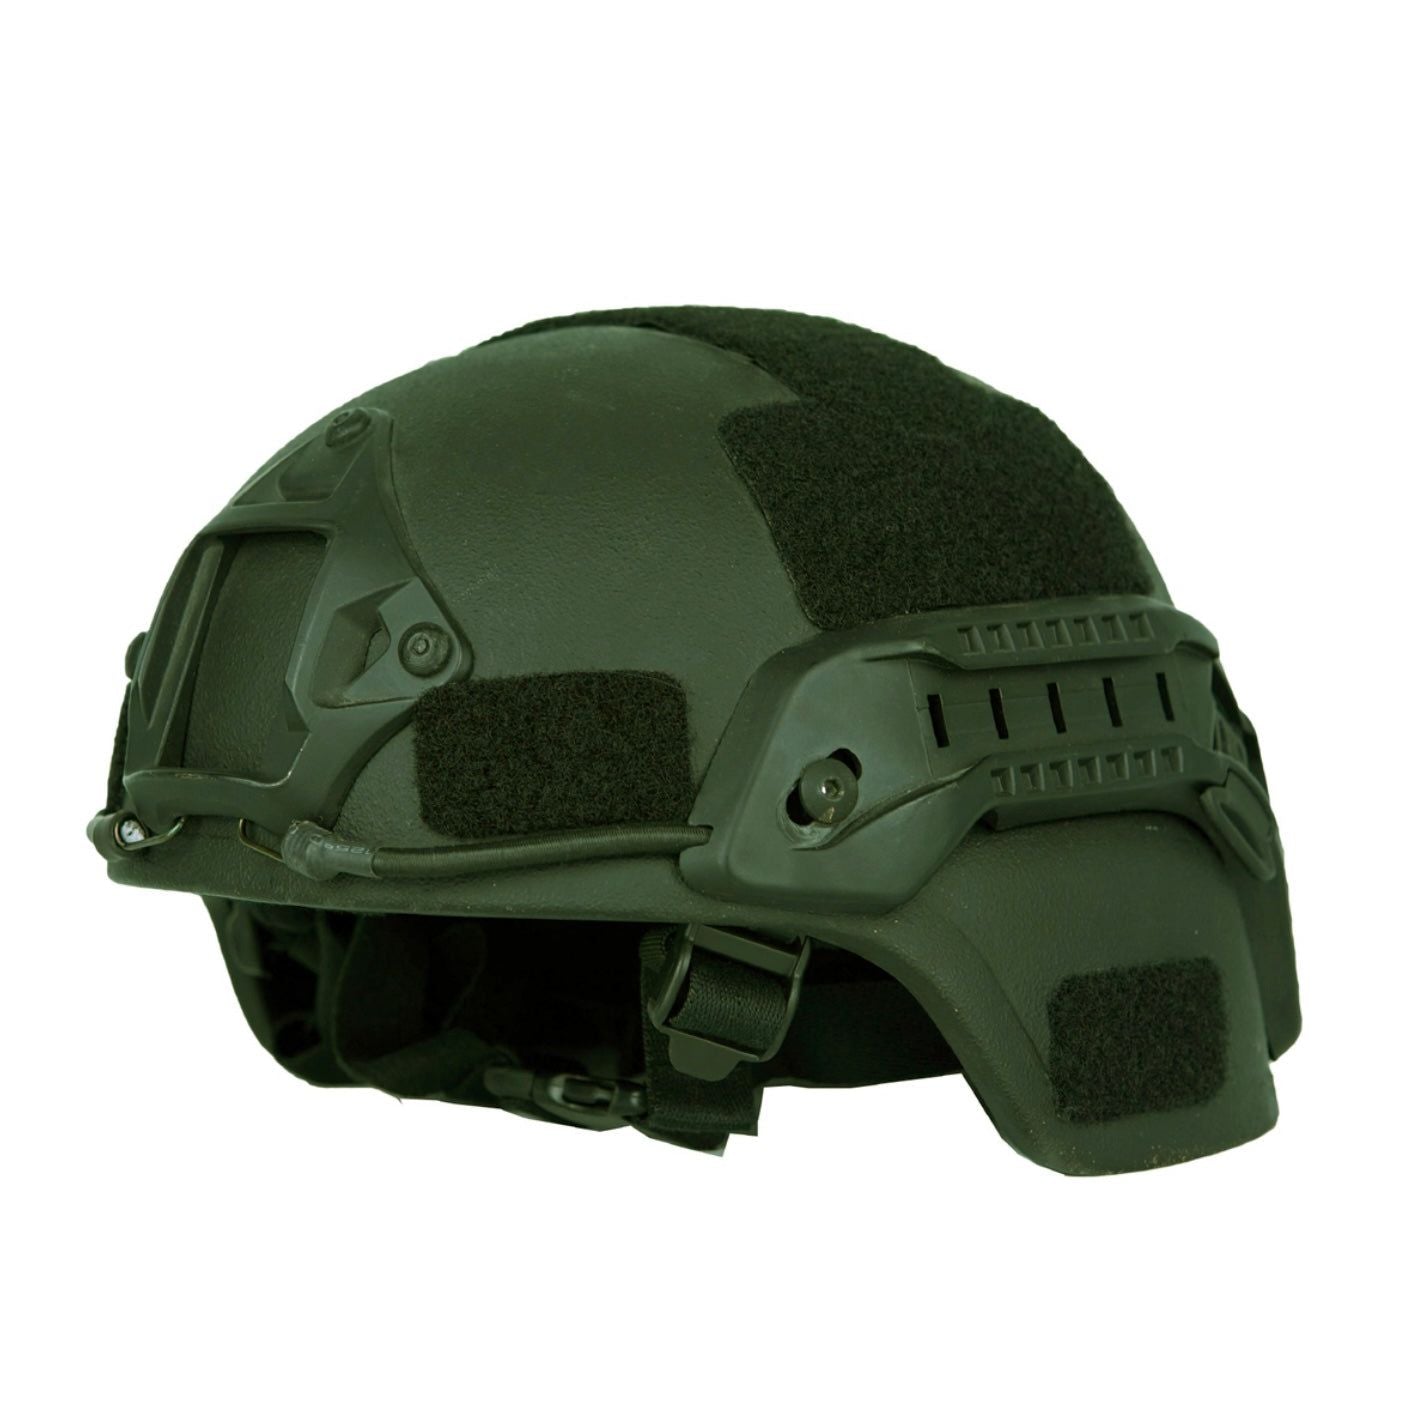 CEST® ballistic protective helmet MICH High